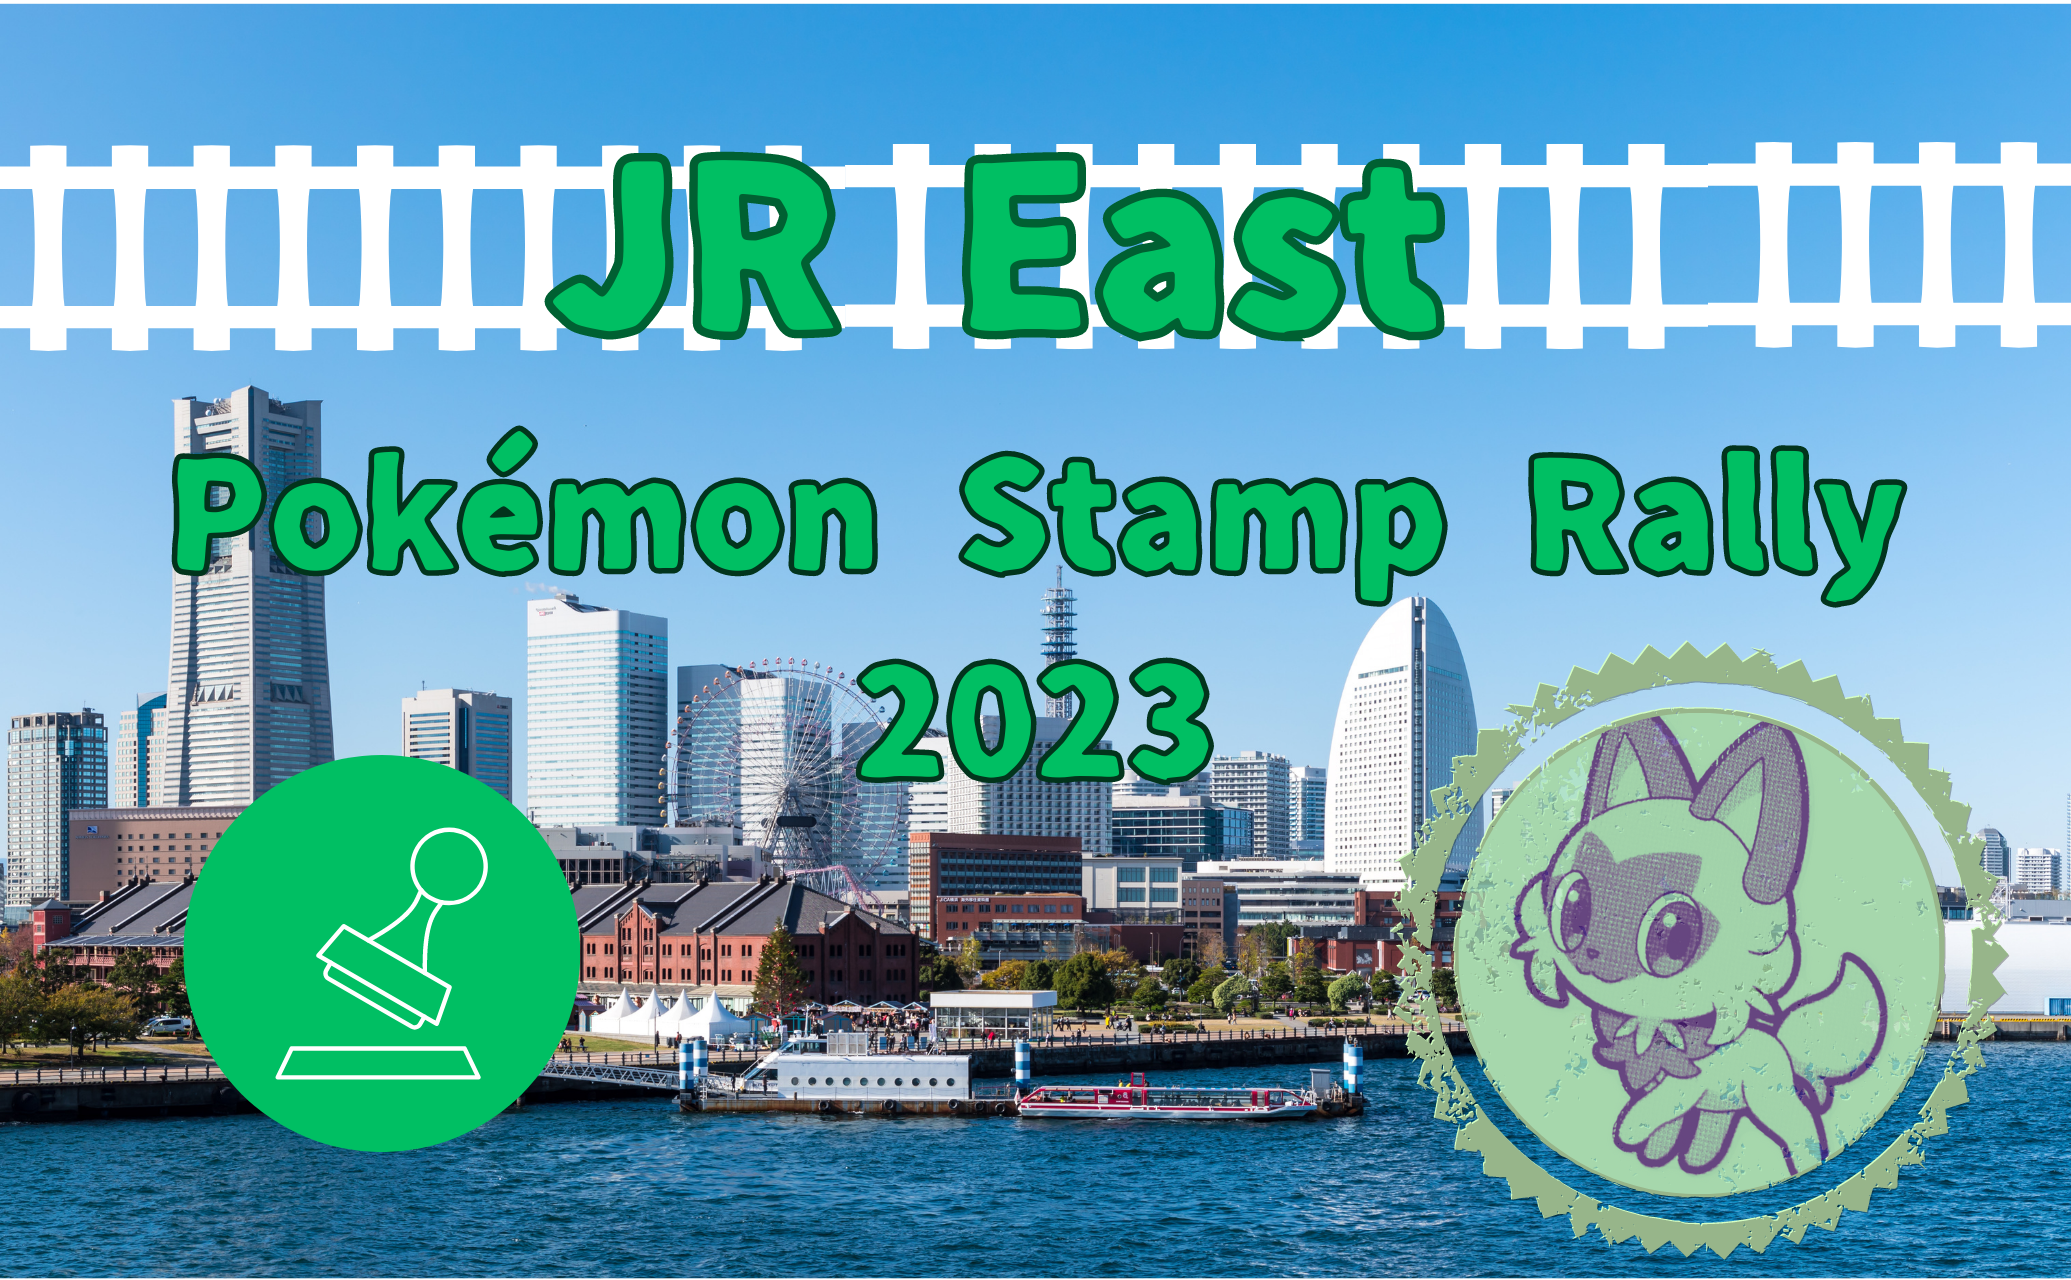 JR East Pokémon Stamp Rally 2023